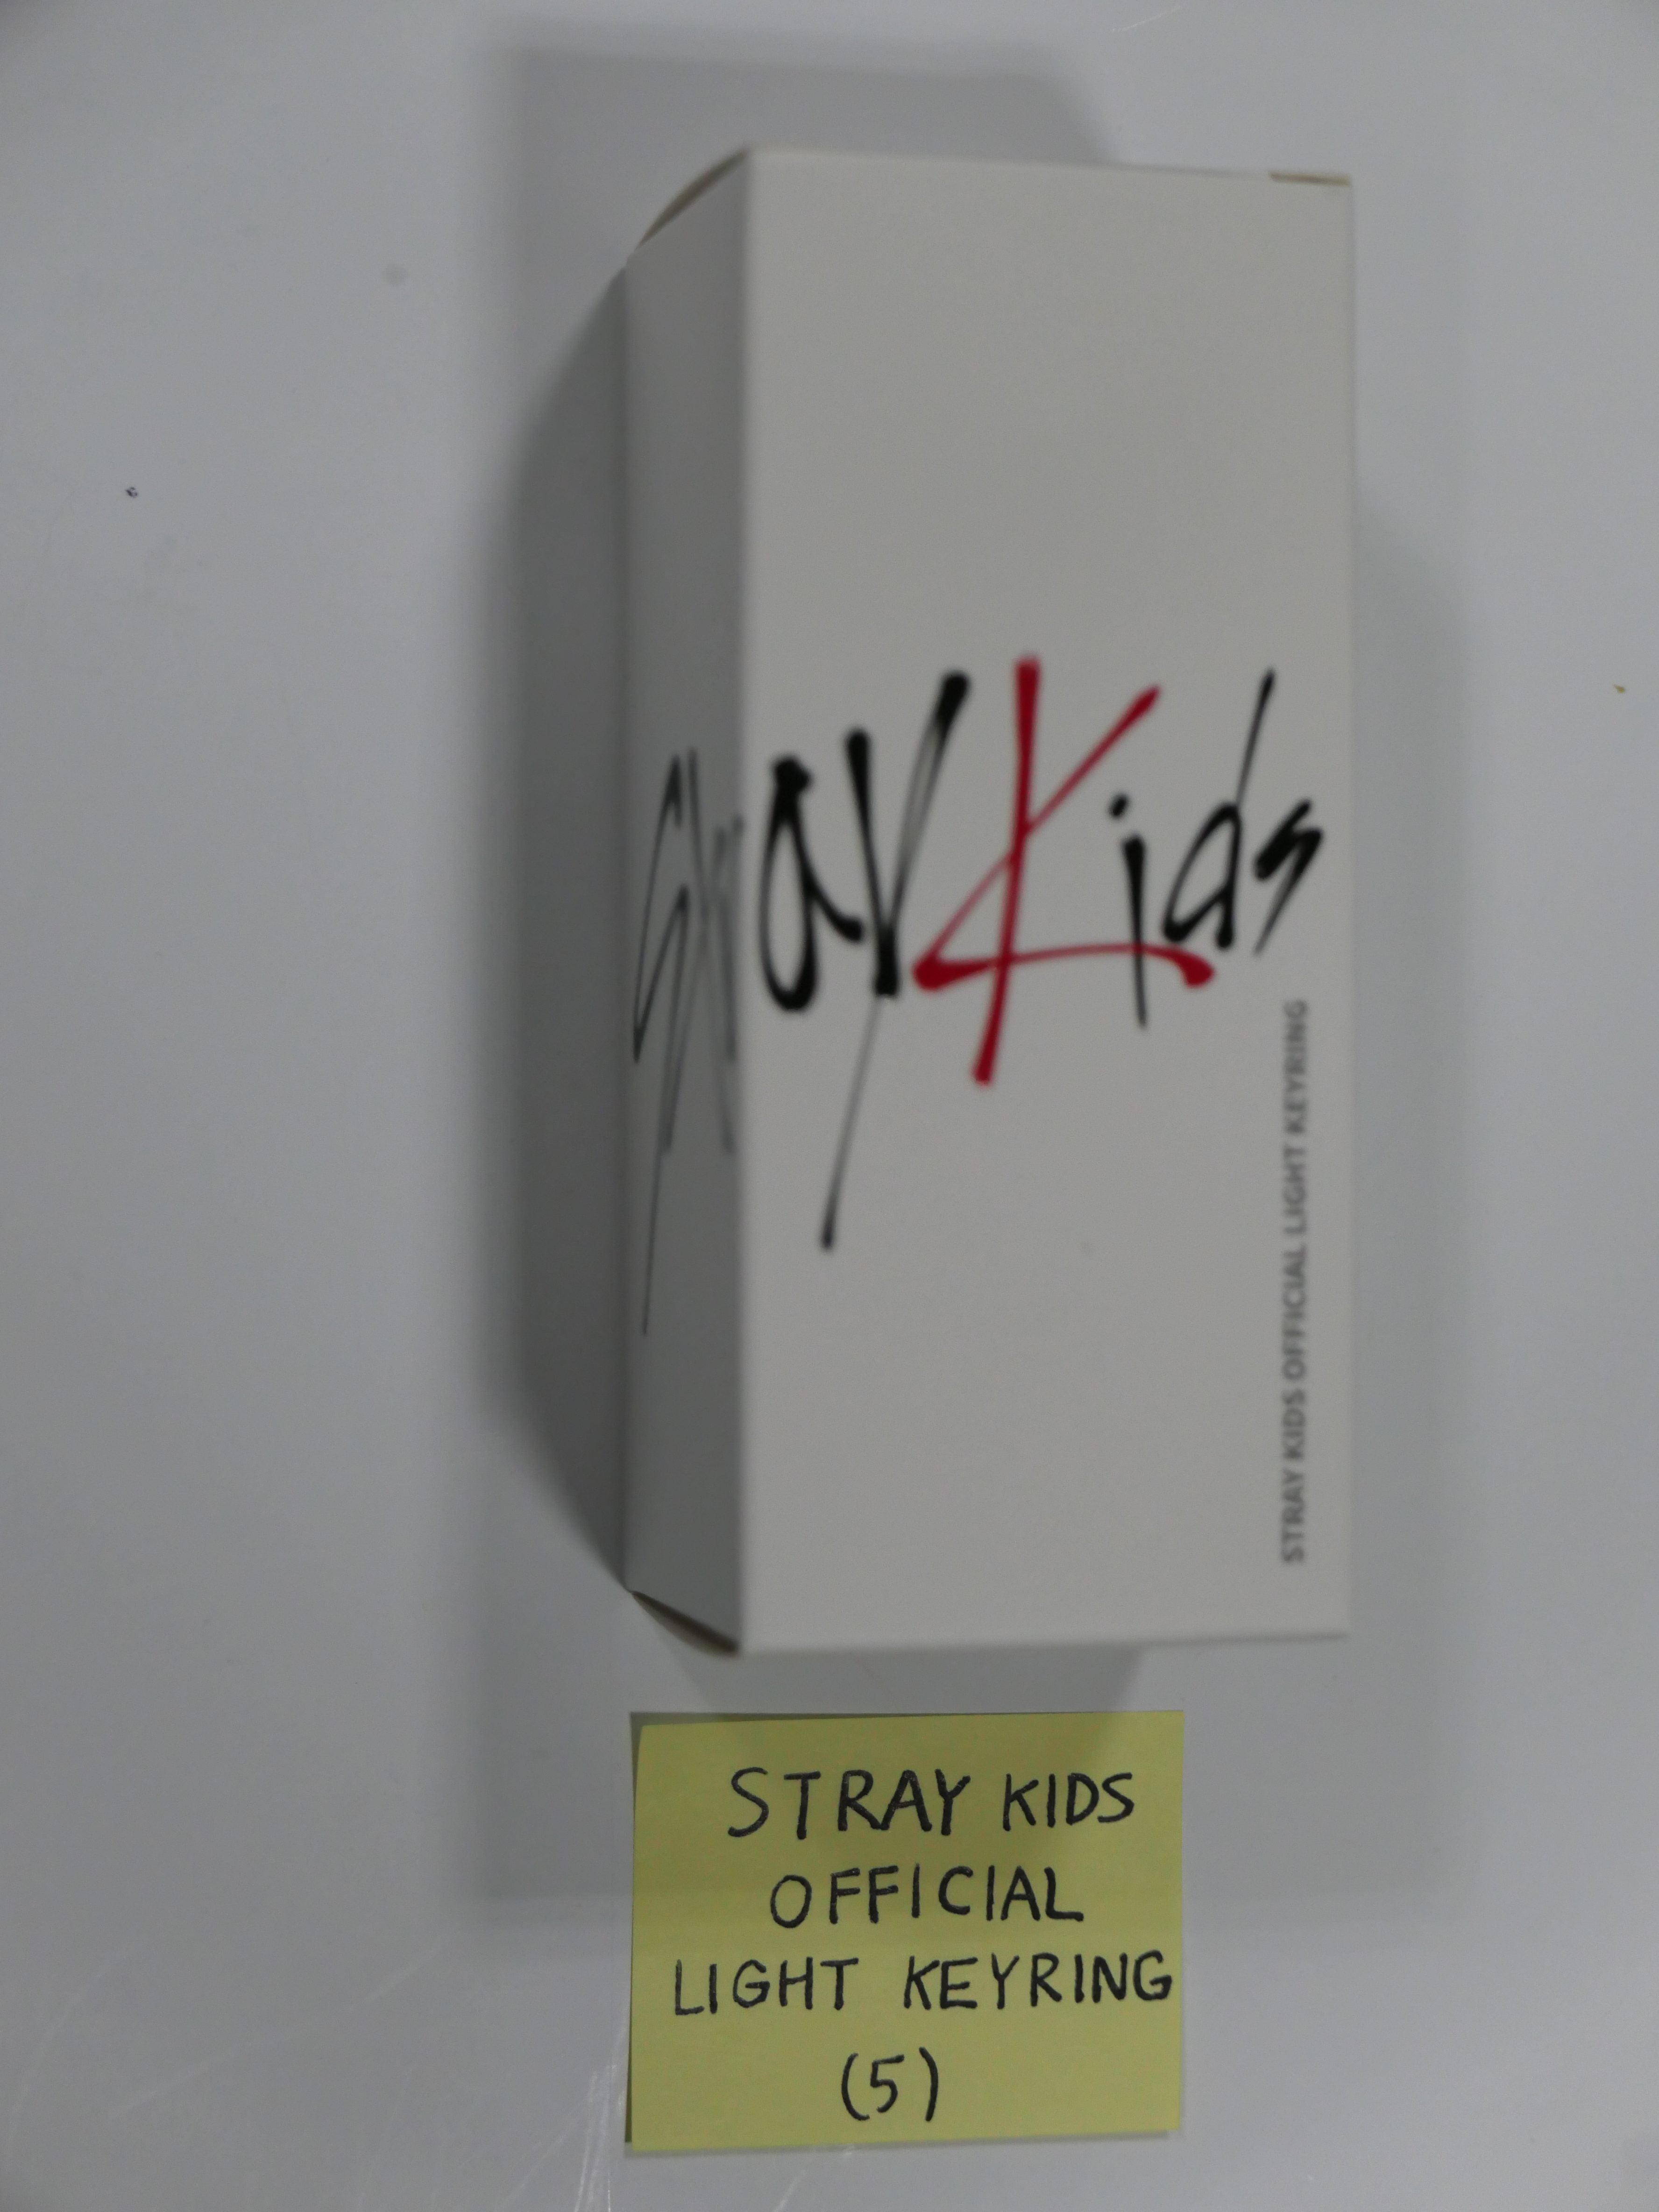 Stray Kids - [1ST#LoveSTAY 'SKZ-X'] Light stick Mini Keyring